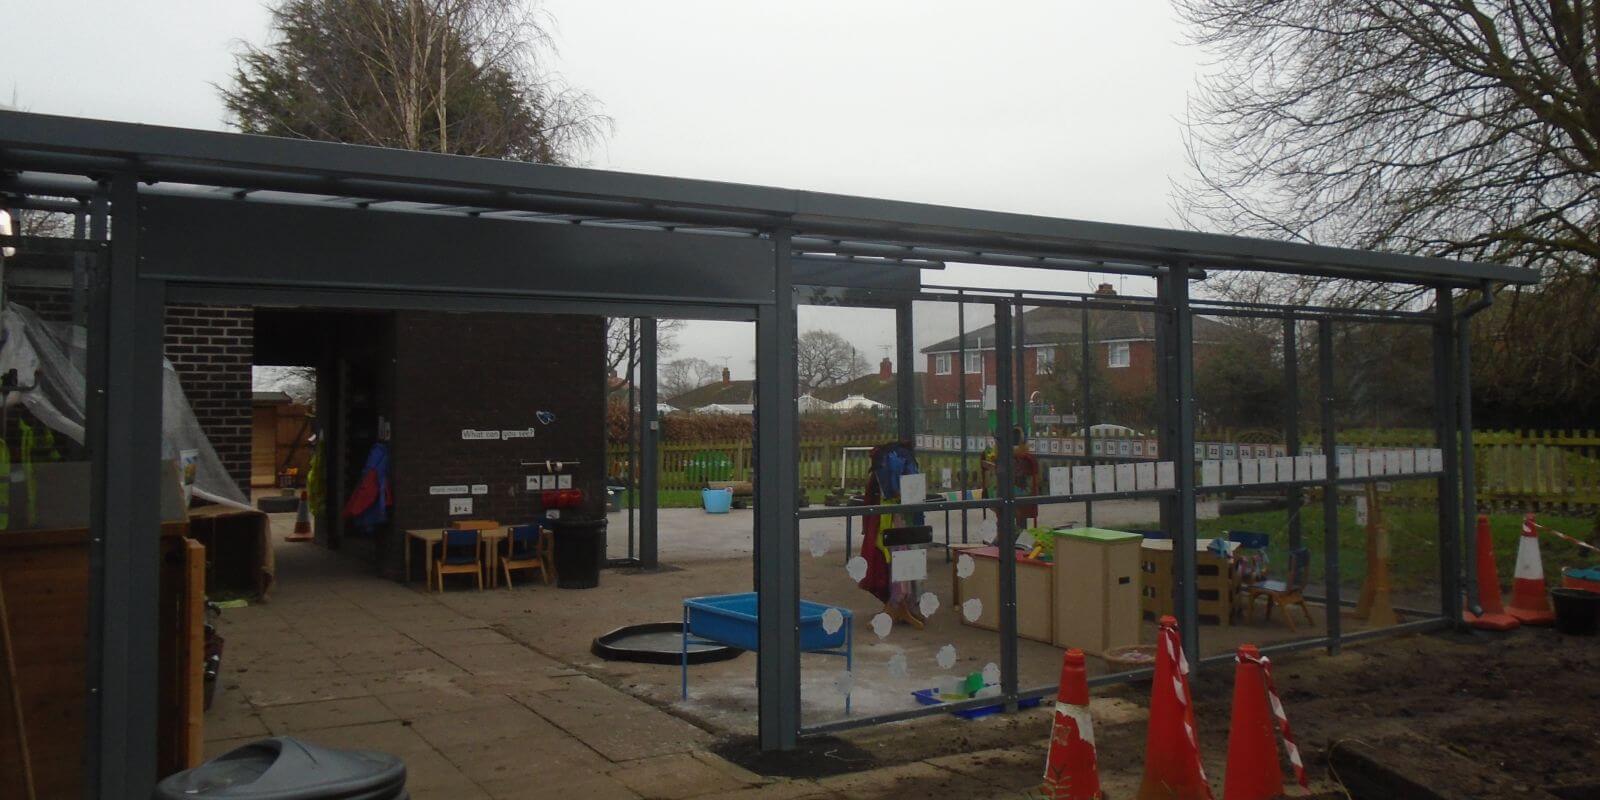 Shelter we designed for Wistaston Academy